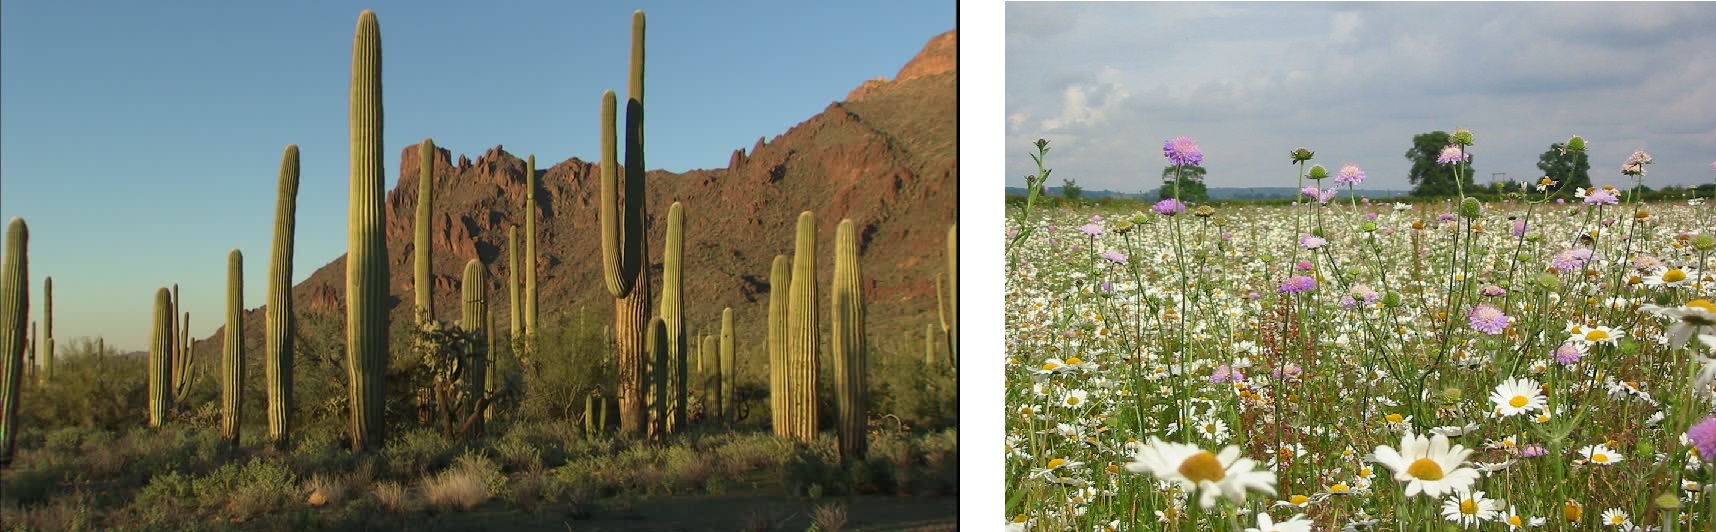 988970567-organ-pipe-cactus-national-monument-saguaro-cactus-desert-plant-semidesert